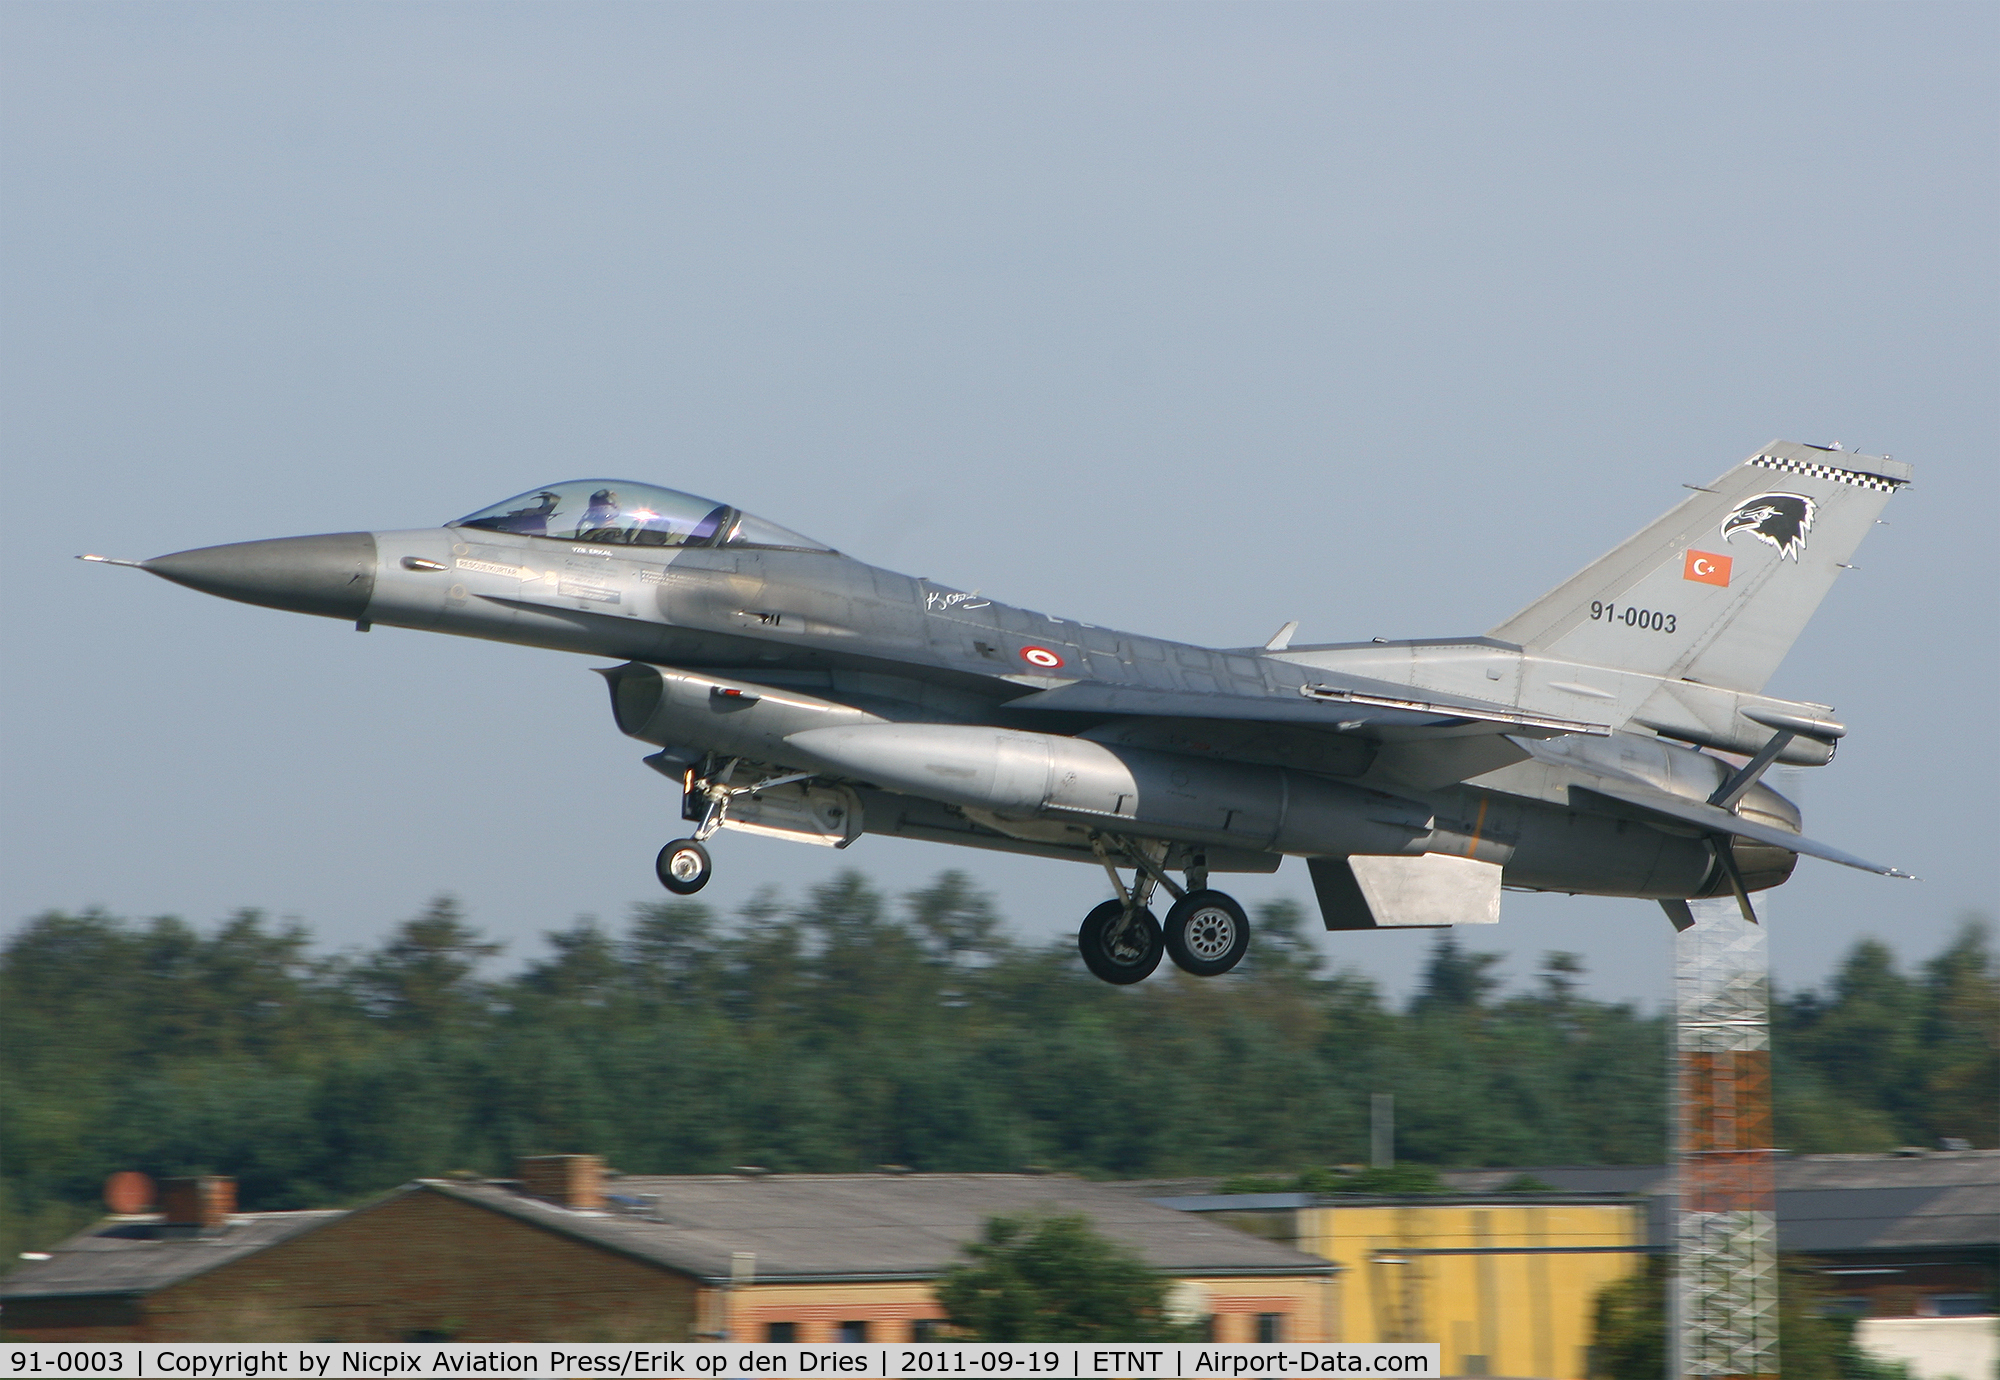 91-0003, 1991 TAI (Turkish Aerospace Industries) F-16C Fighting Falcon C/N 4R-83, F-16C 91-0003 returning from a Brilliant Arrow 2011  mission at Wittmund AB, Germany.